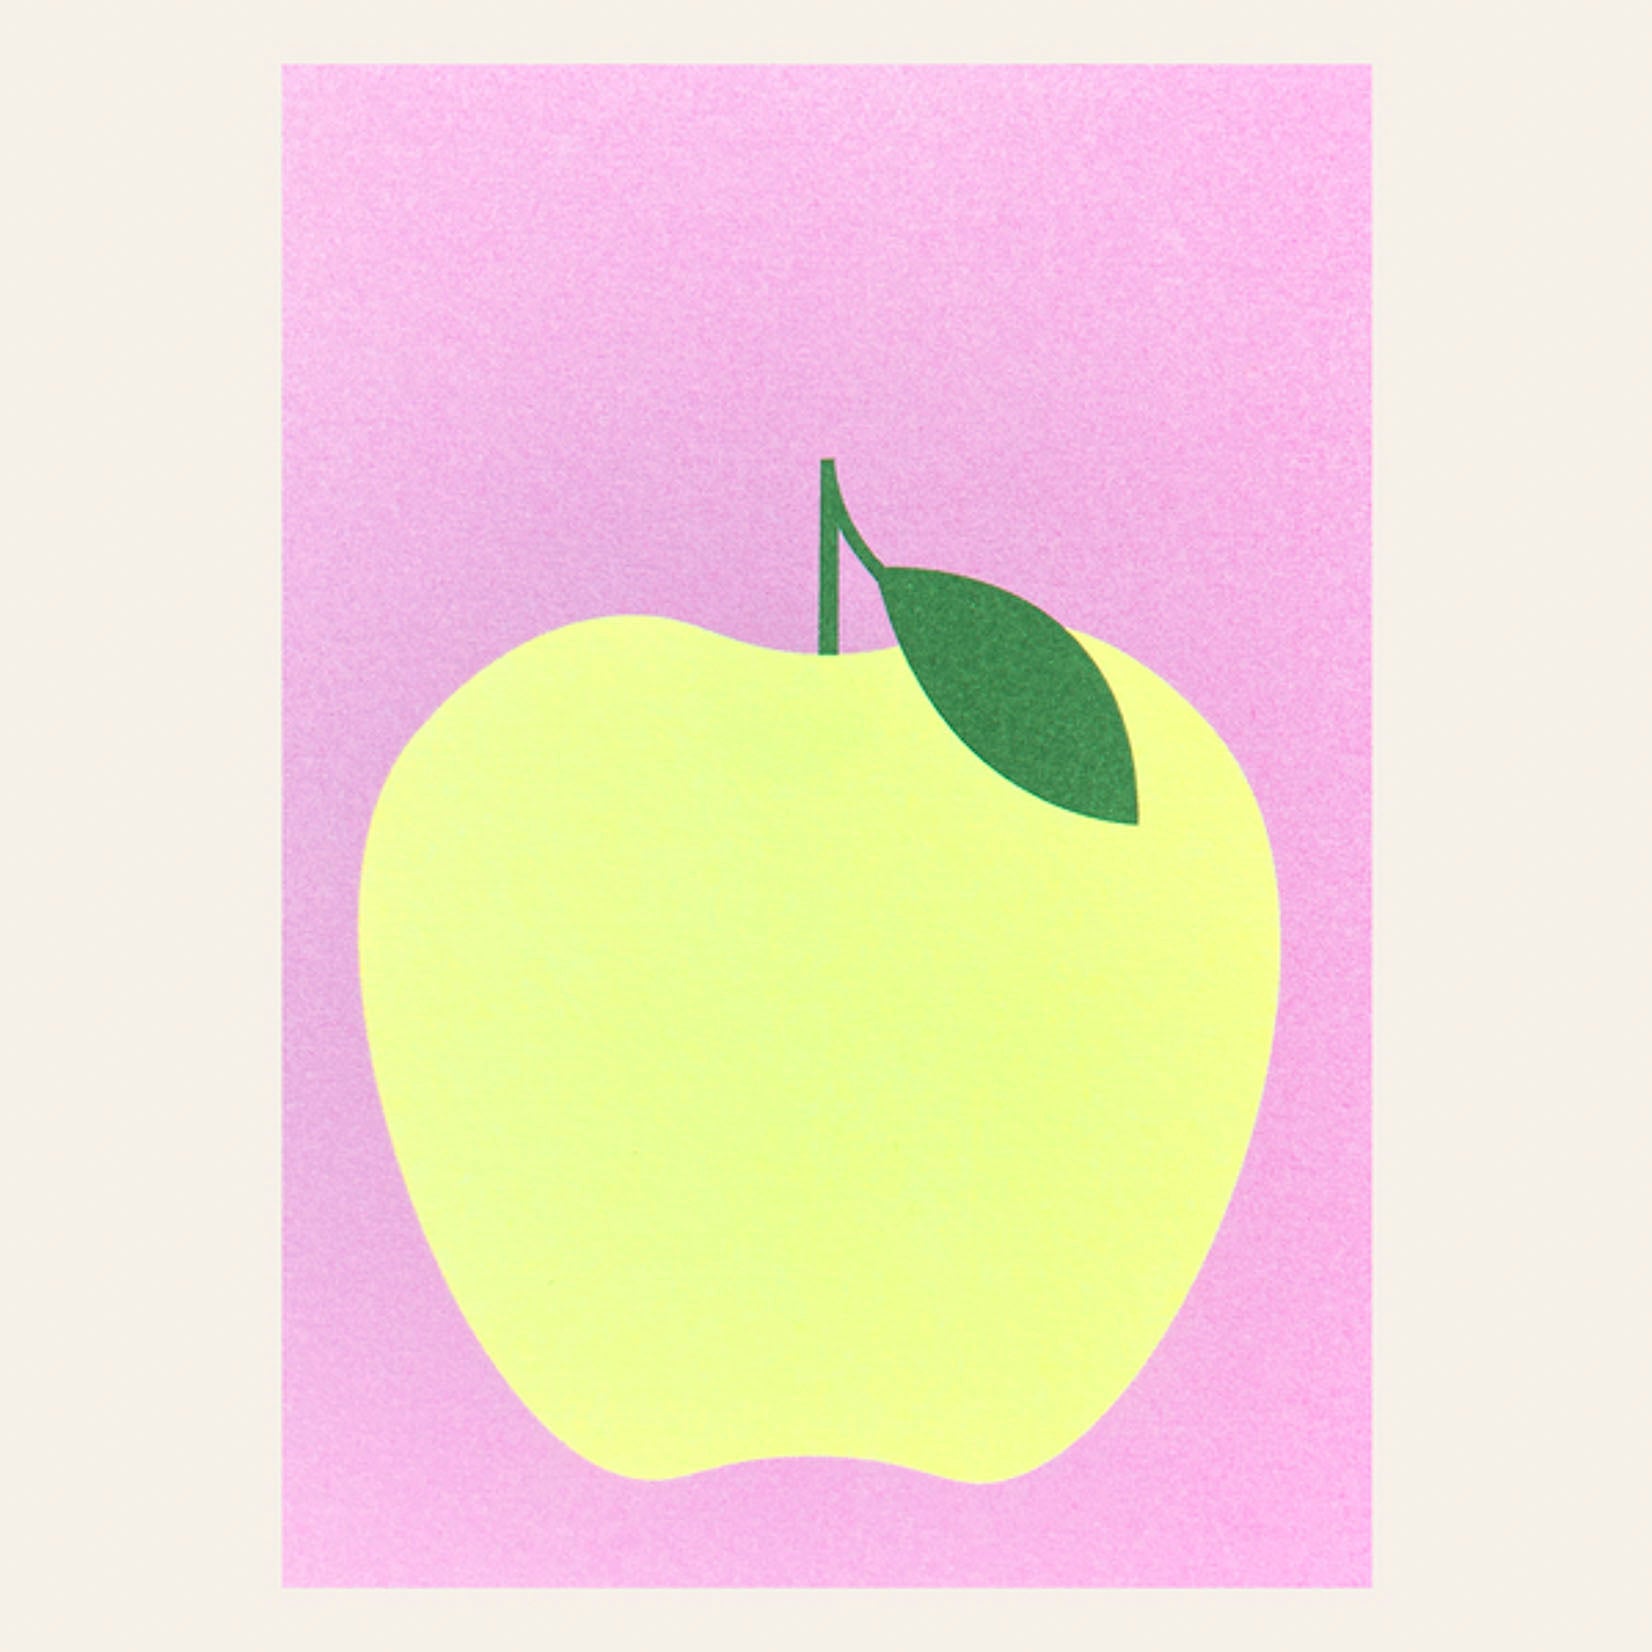 Herr & Frau Rio Karte Postkarte Risographie Riso Druck Apfel Apple Obst